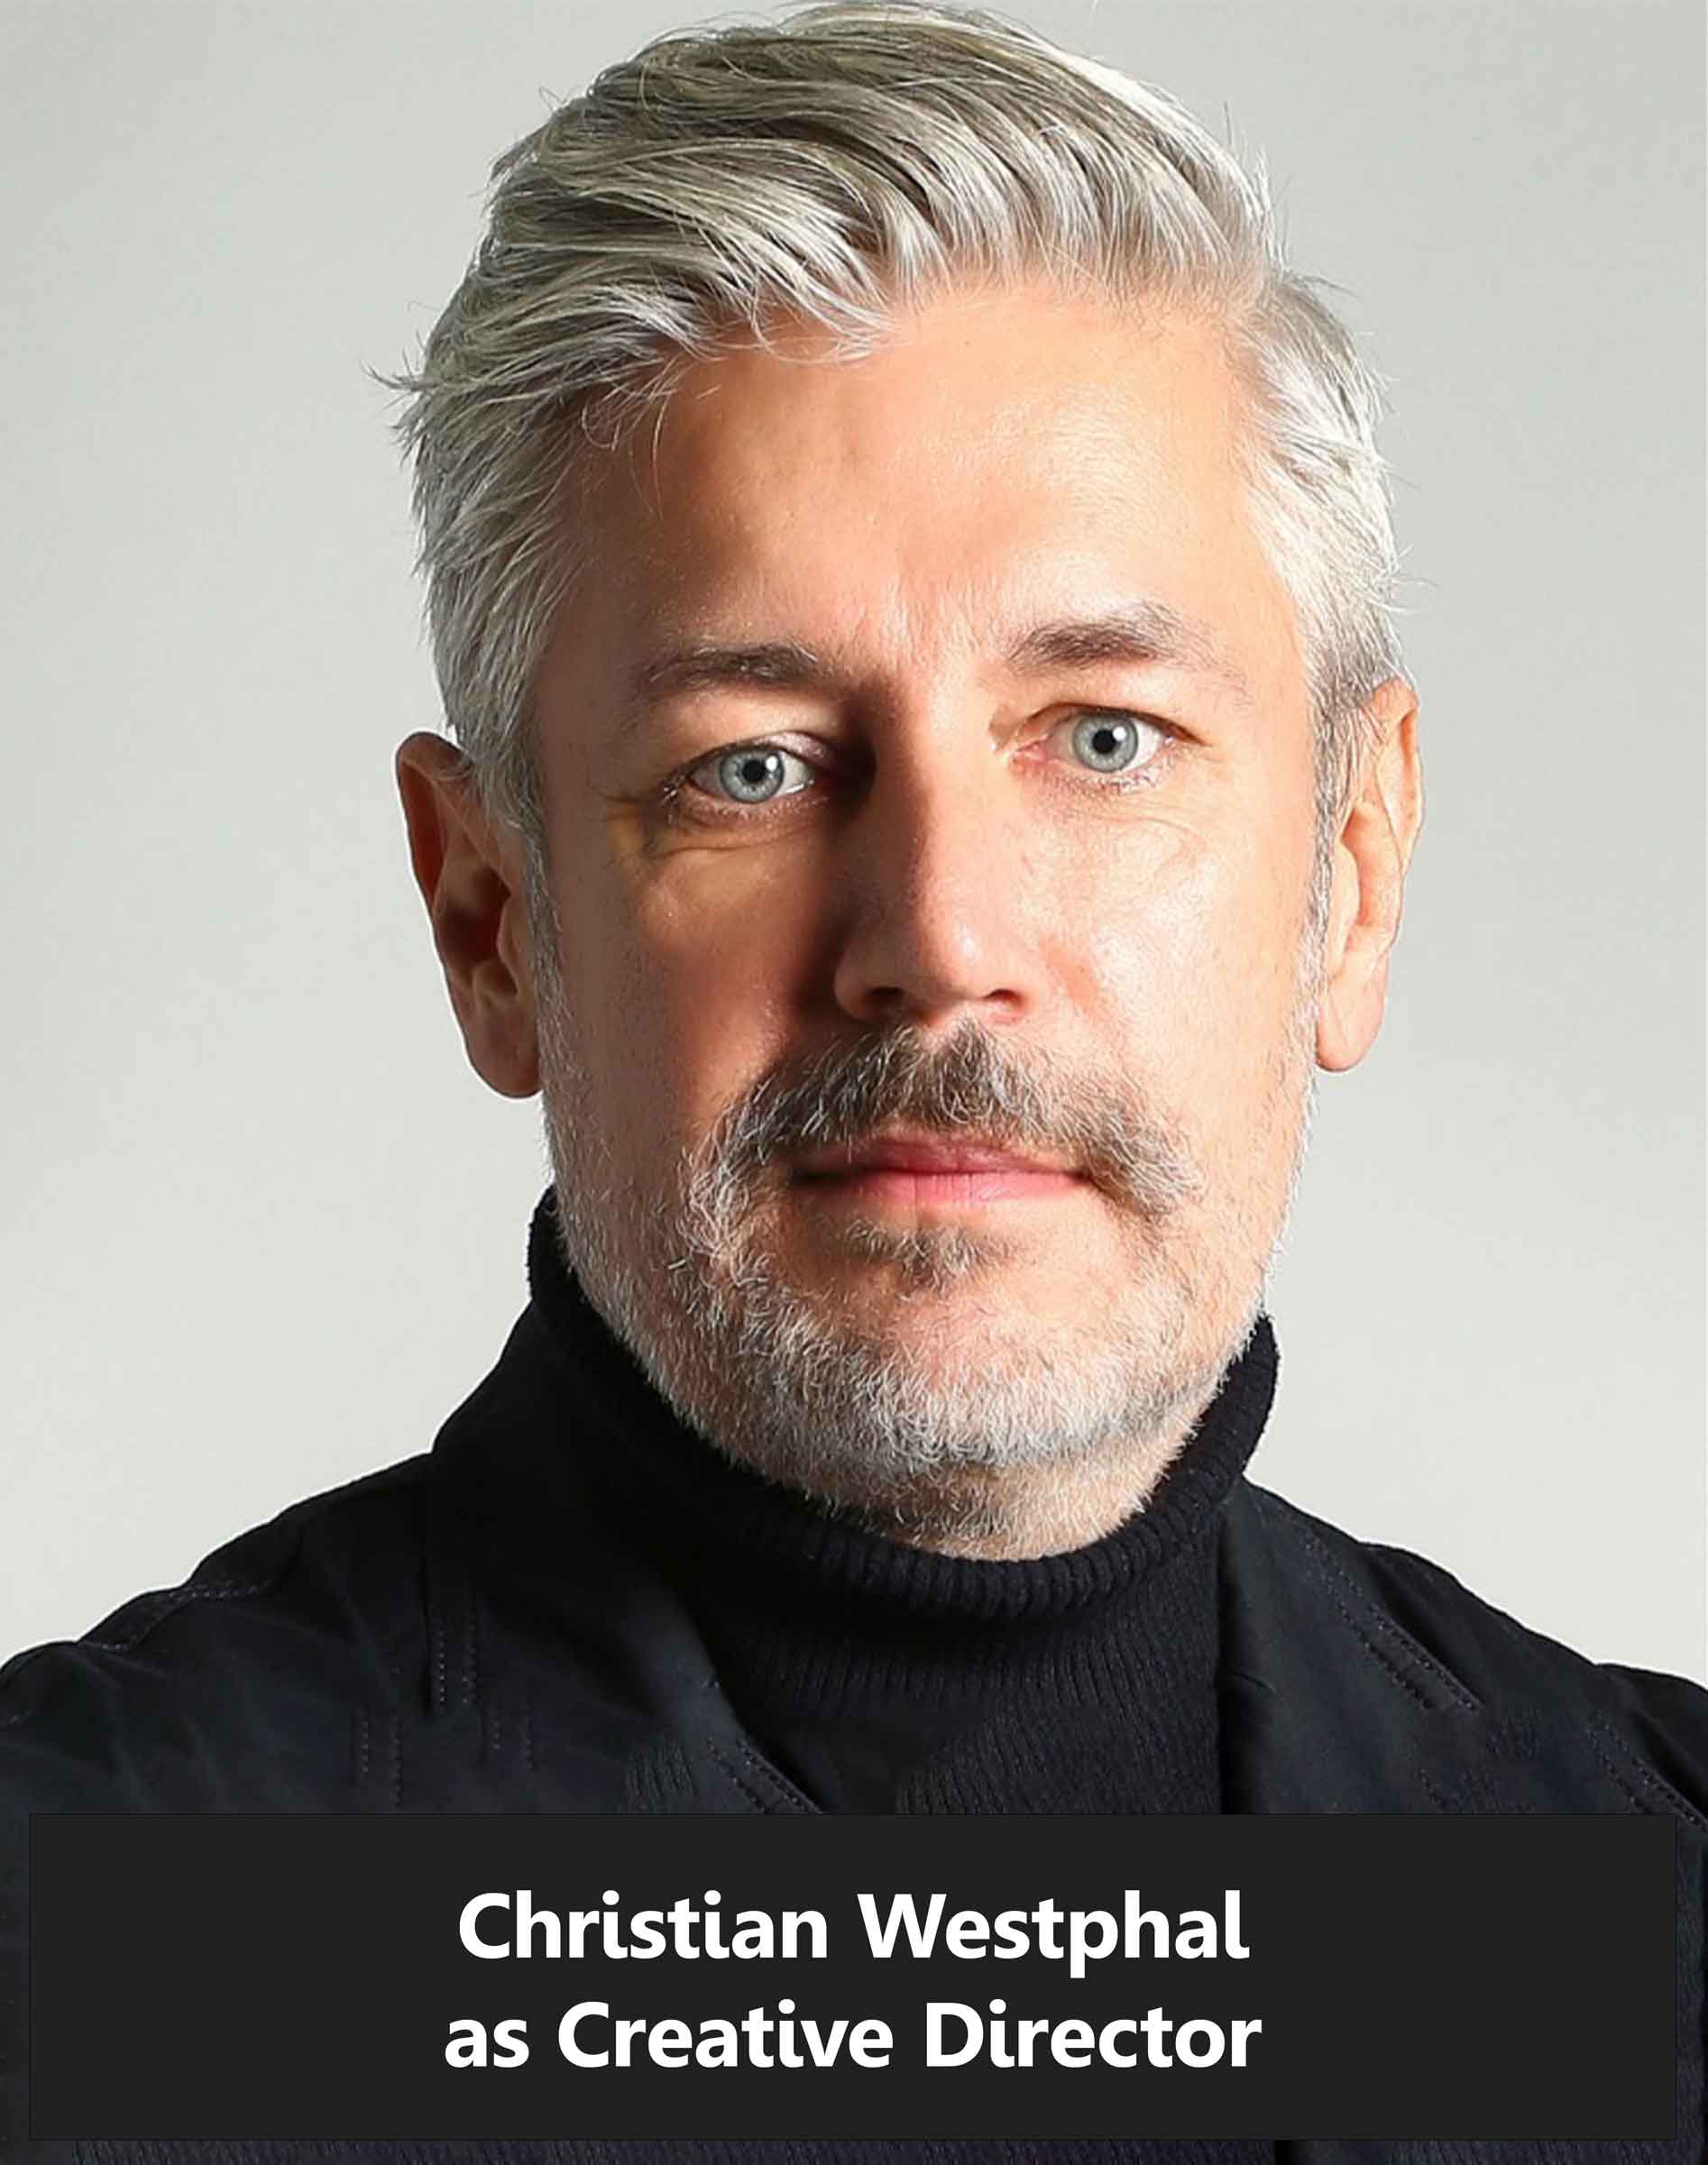 Christian Westphal as Creative Director